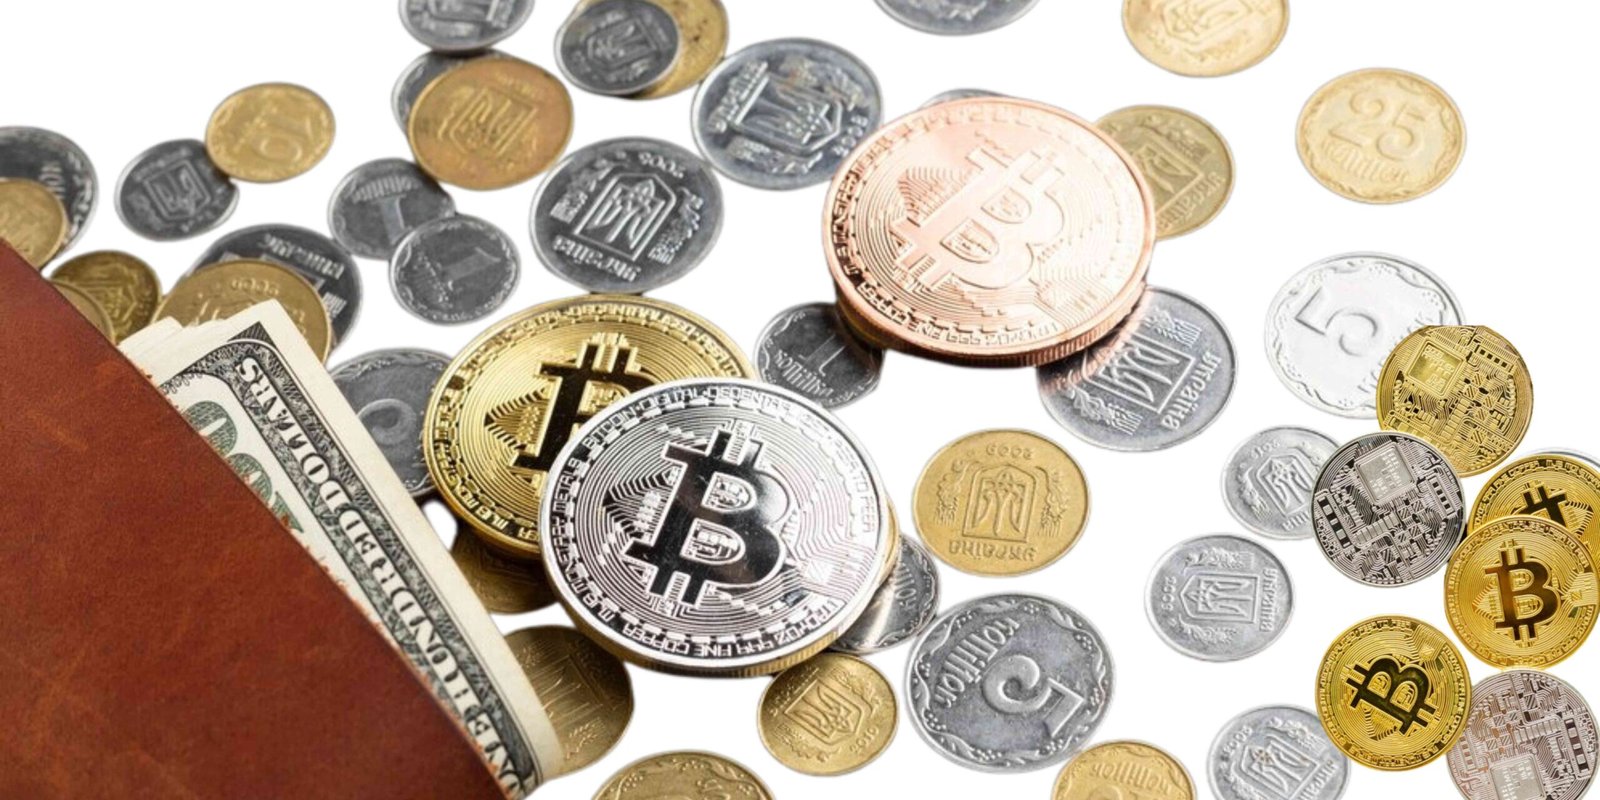 Bitcoin Price Rises as Investors Anticipate More Money Printing